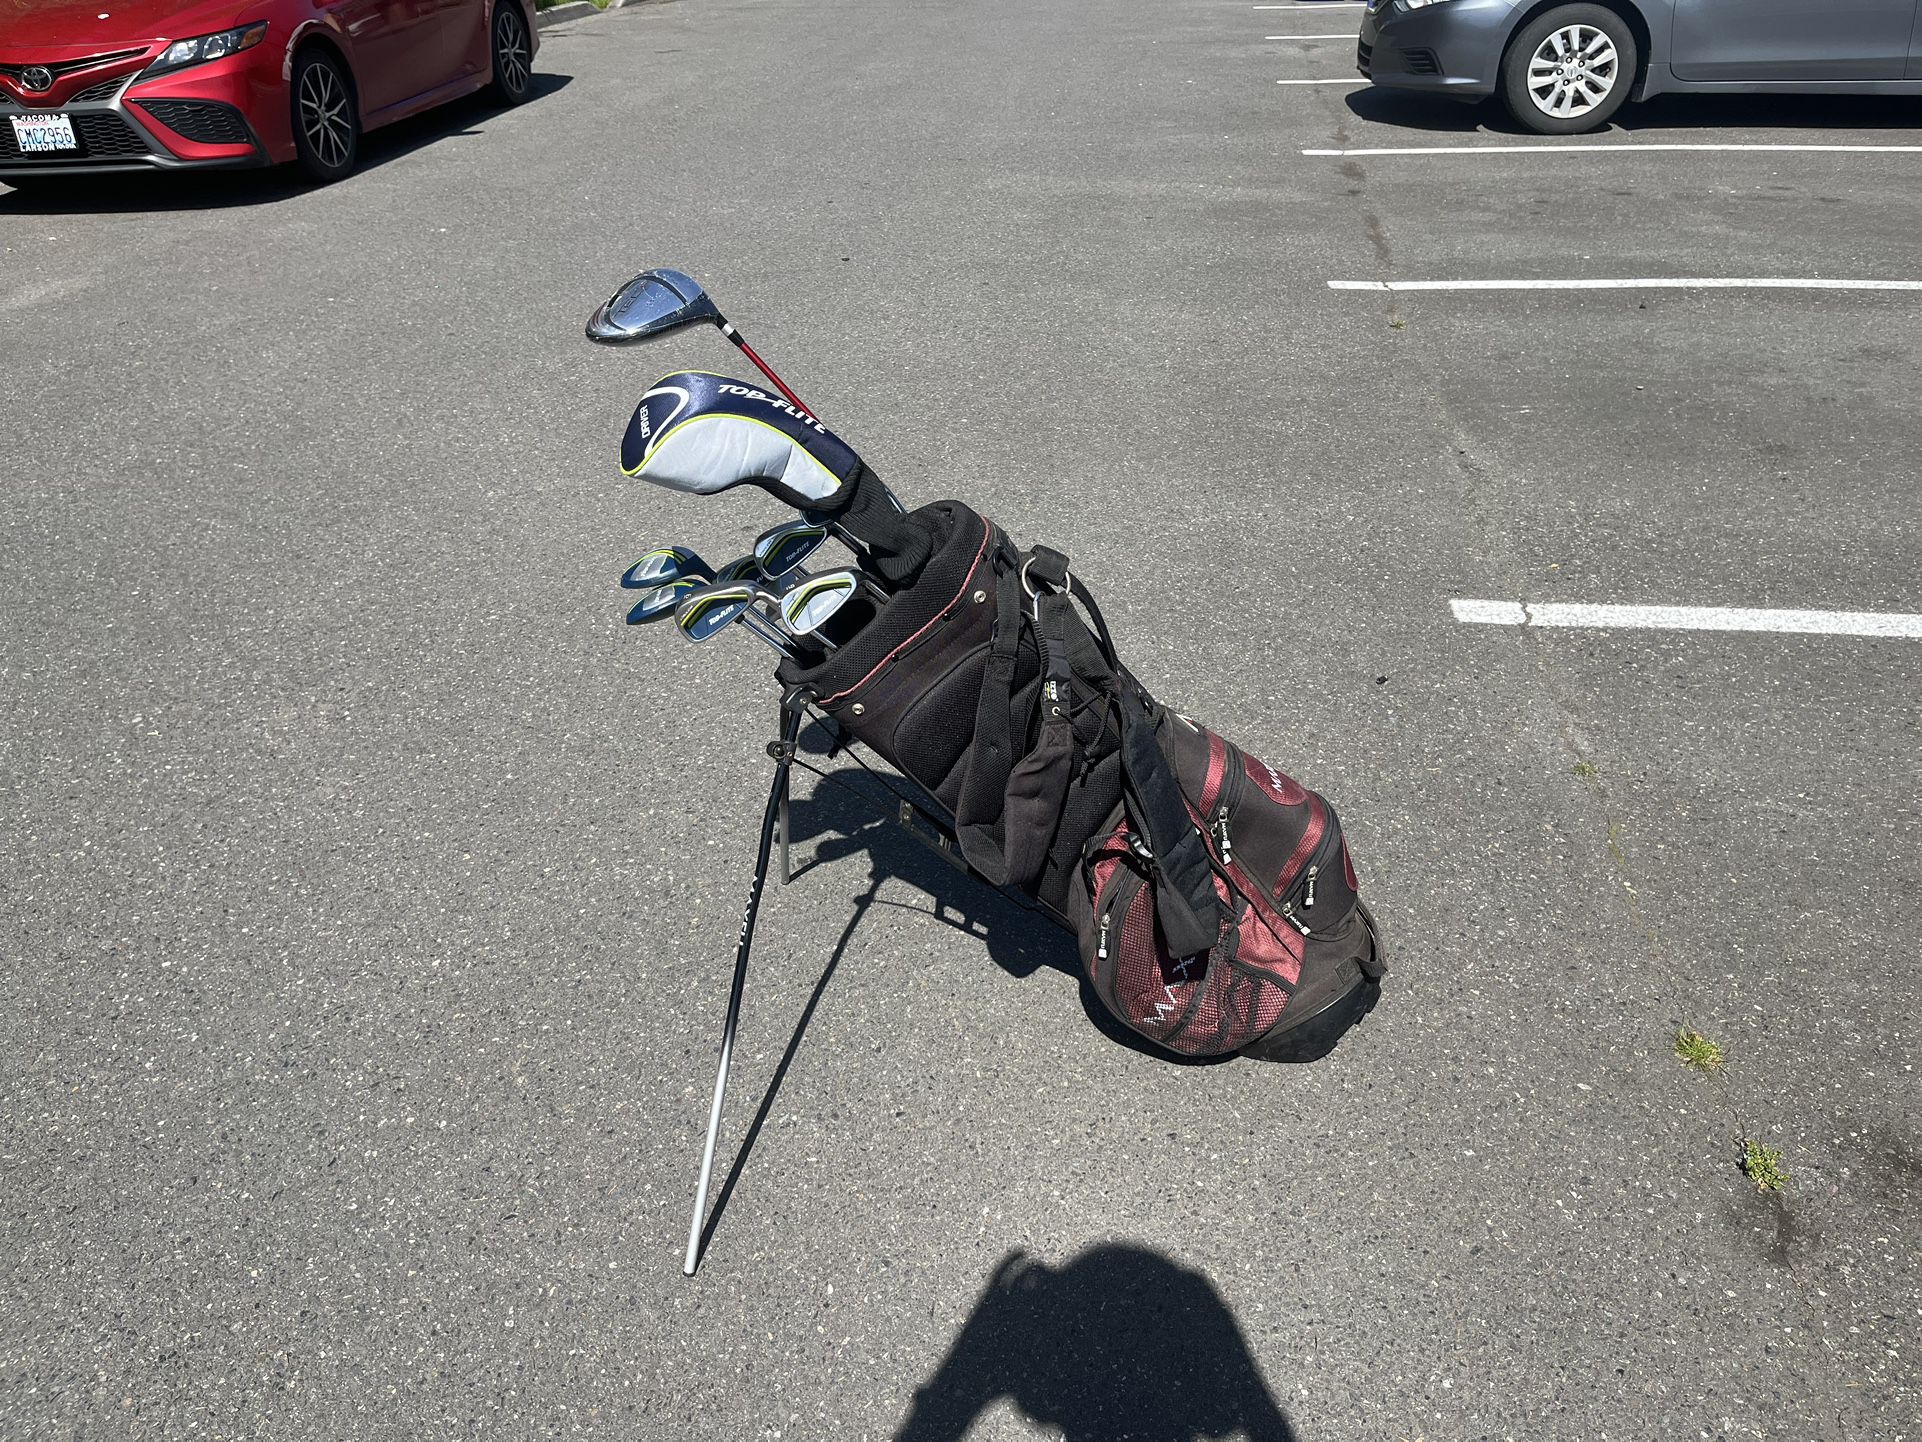 Full Golf Club Set With Bag 